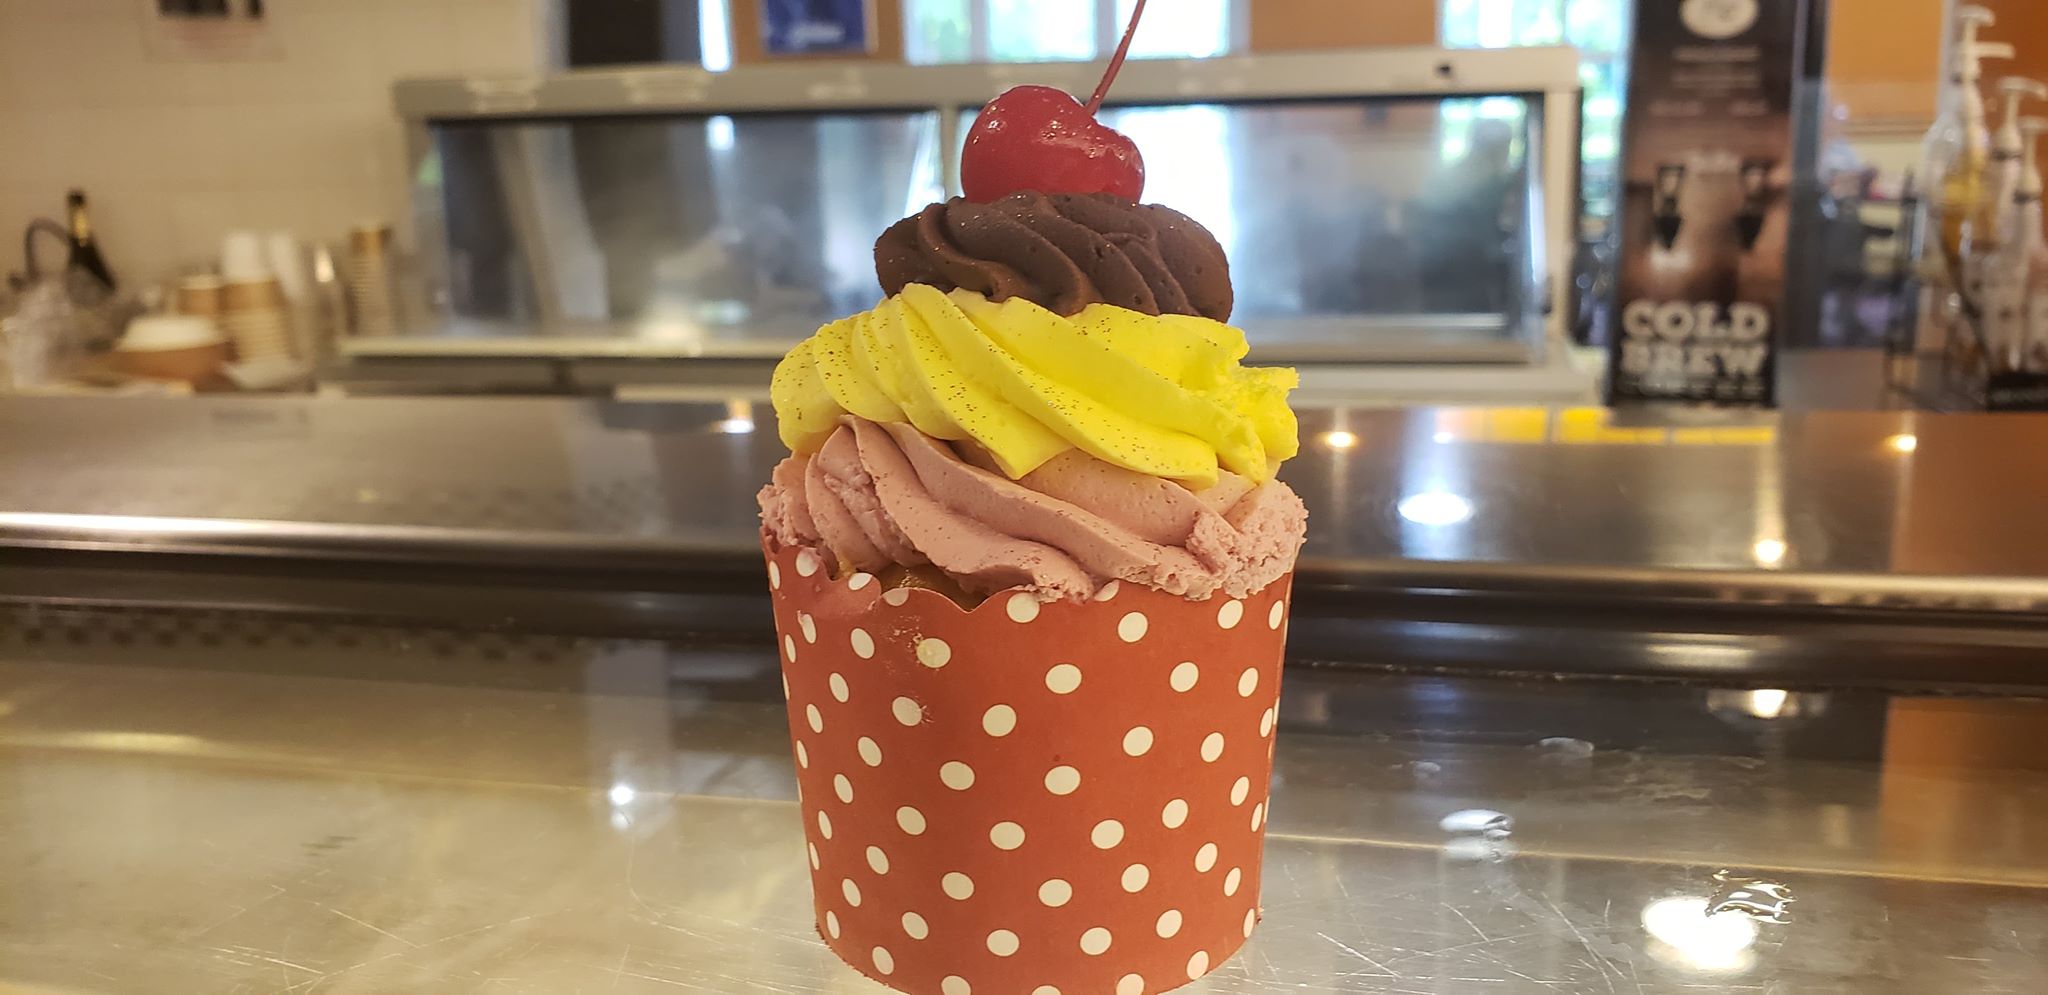 Banana Split Cupcake Spotted at Disney’s All Star Movies Resort!